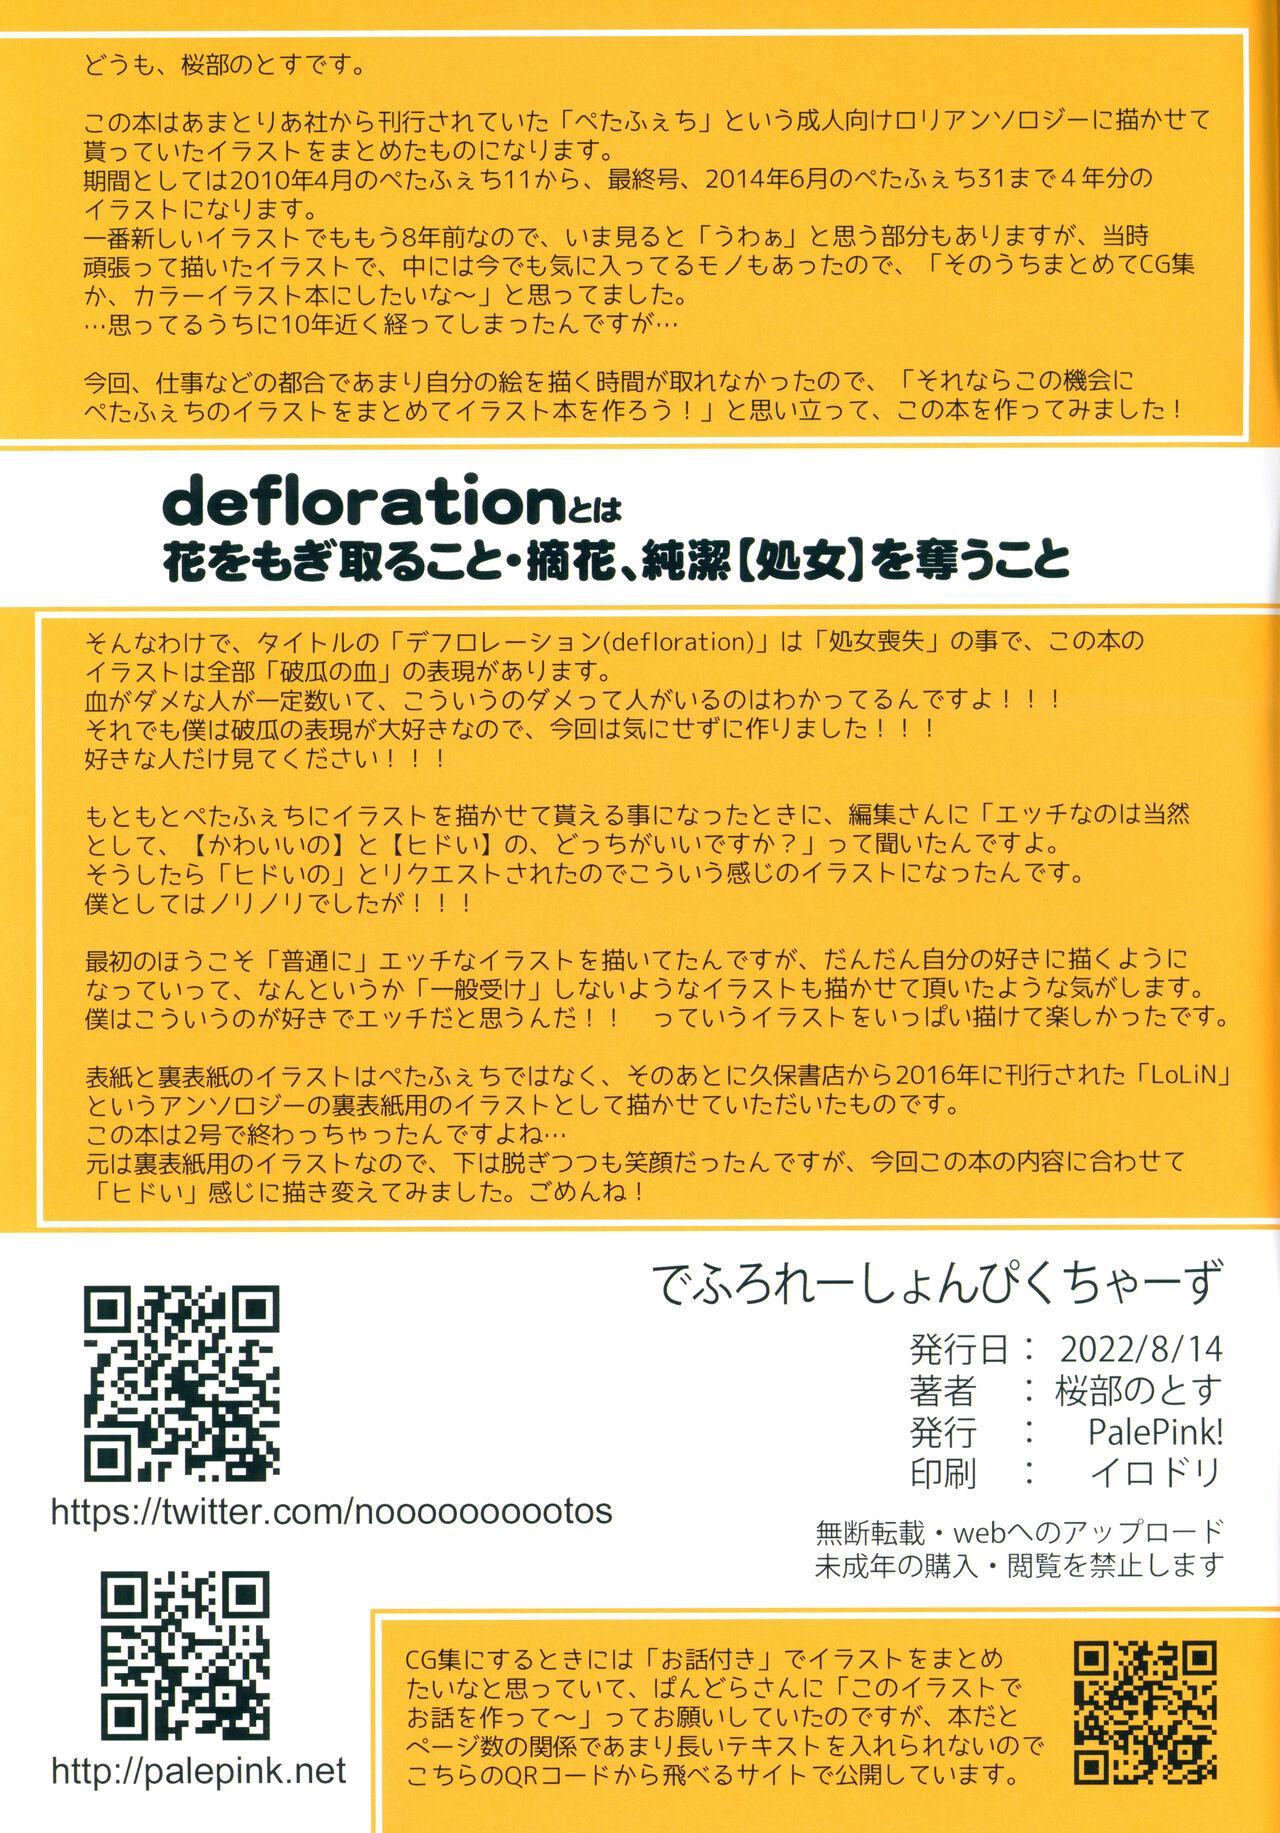 Defloration Pictures 1